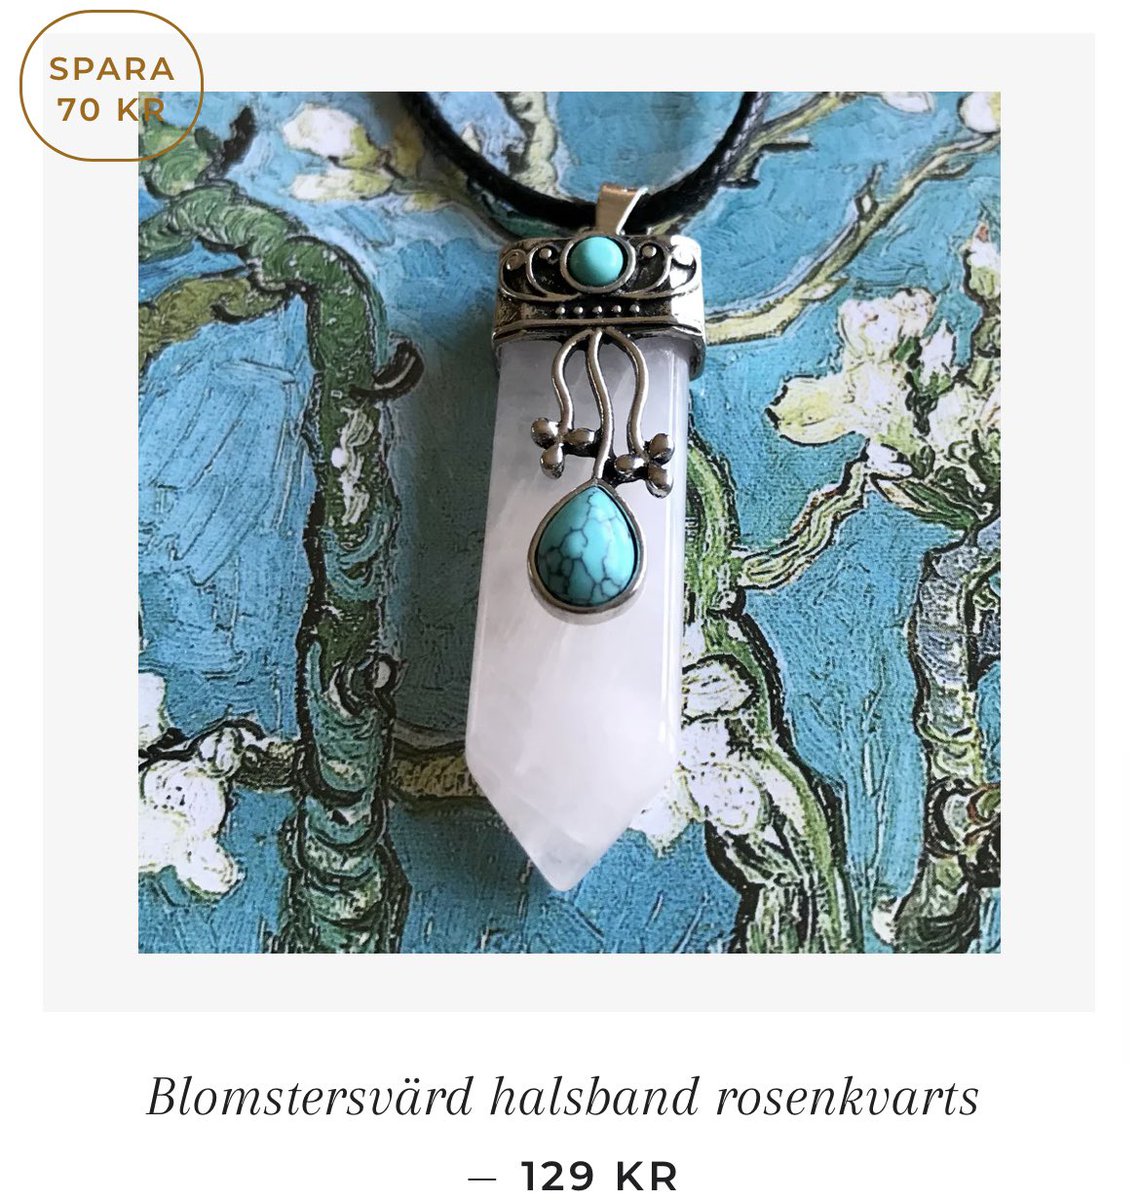 Summer sale! Crystal jewelry.
sandersgarden.se
#rosequartz #rosequartzjewelry #crystals #crystaljewelry #necklace